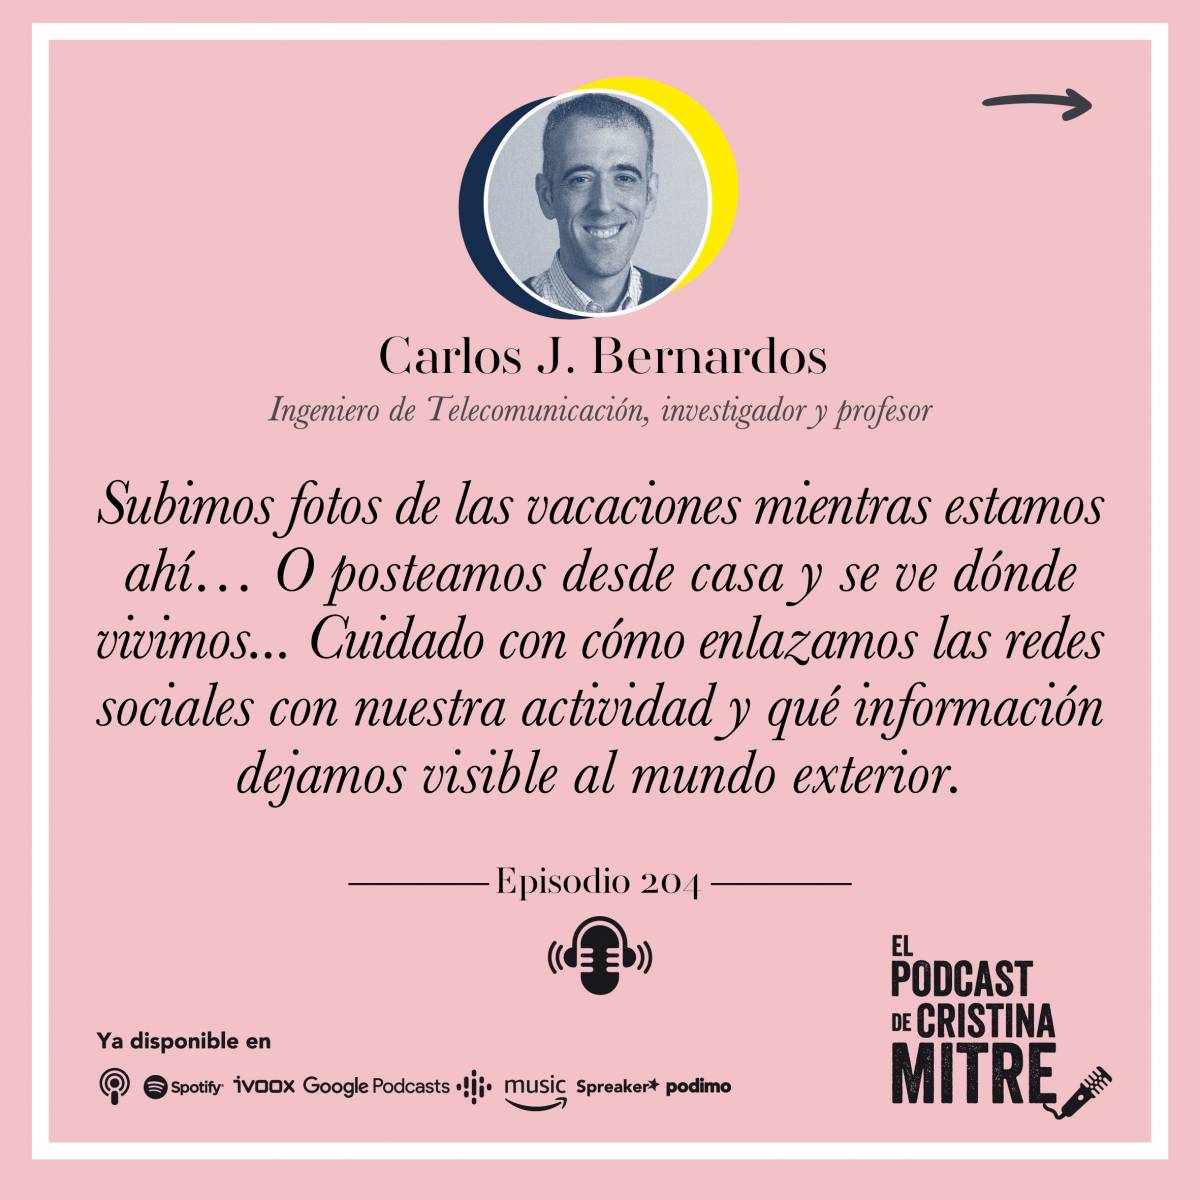 El podcast de Cristina Mitre Carlos J. Bernardos Internet proteger datos